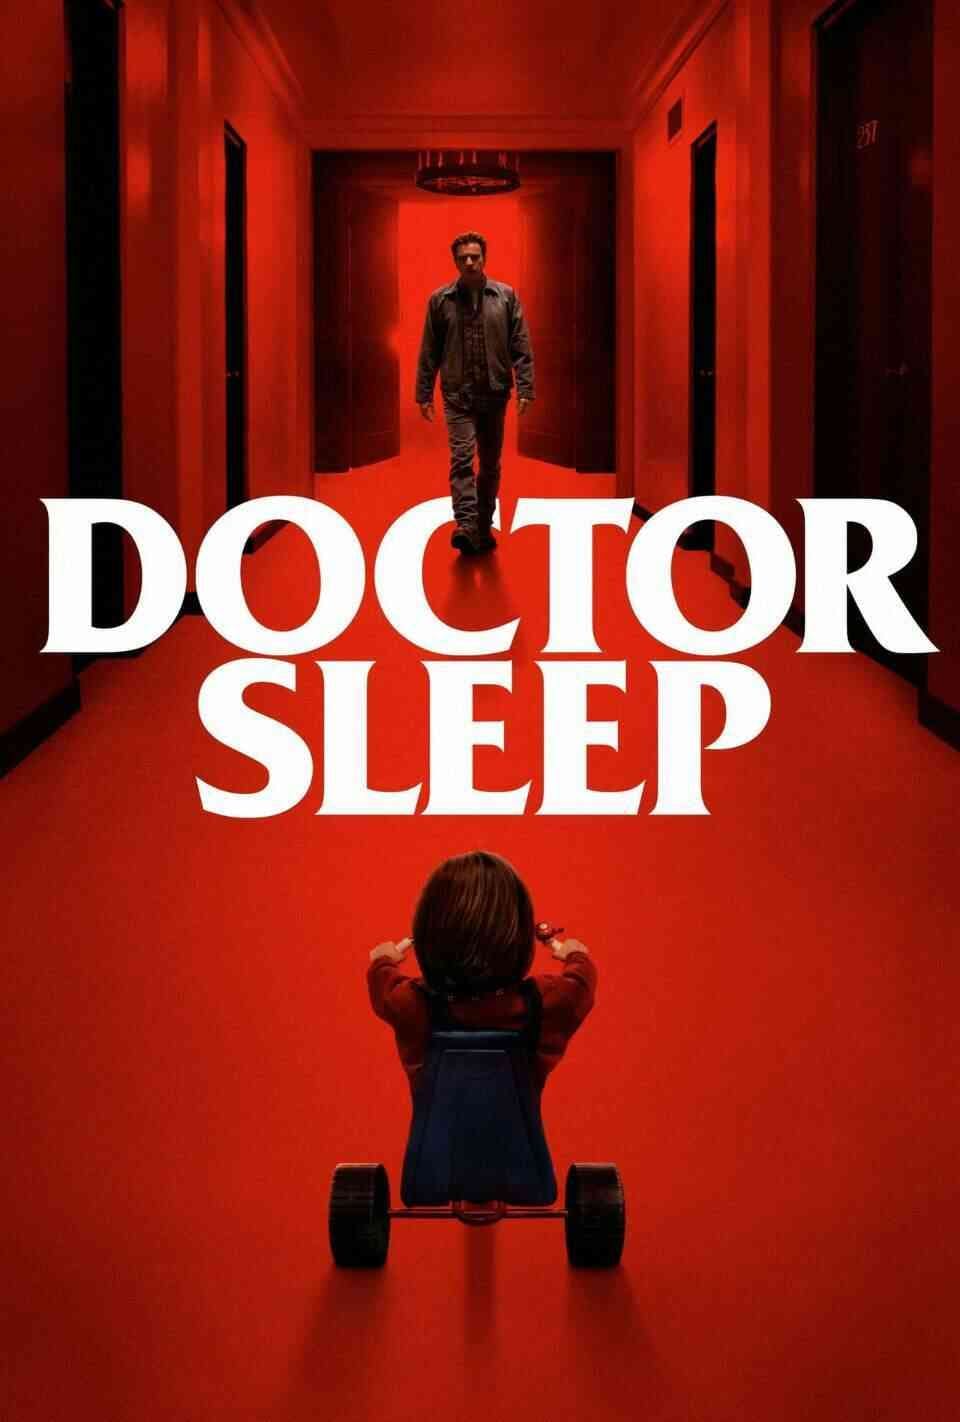 Read Doctor Sleep screenplay (poster)